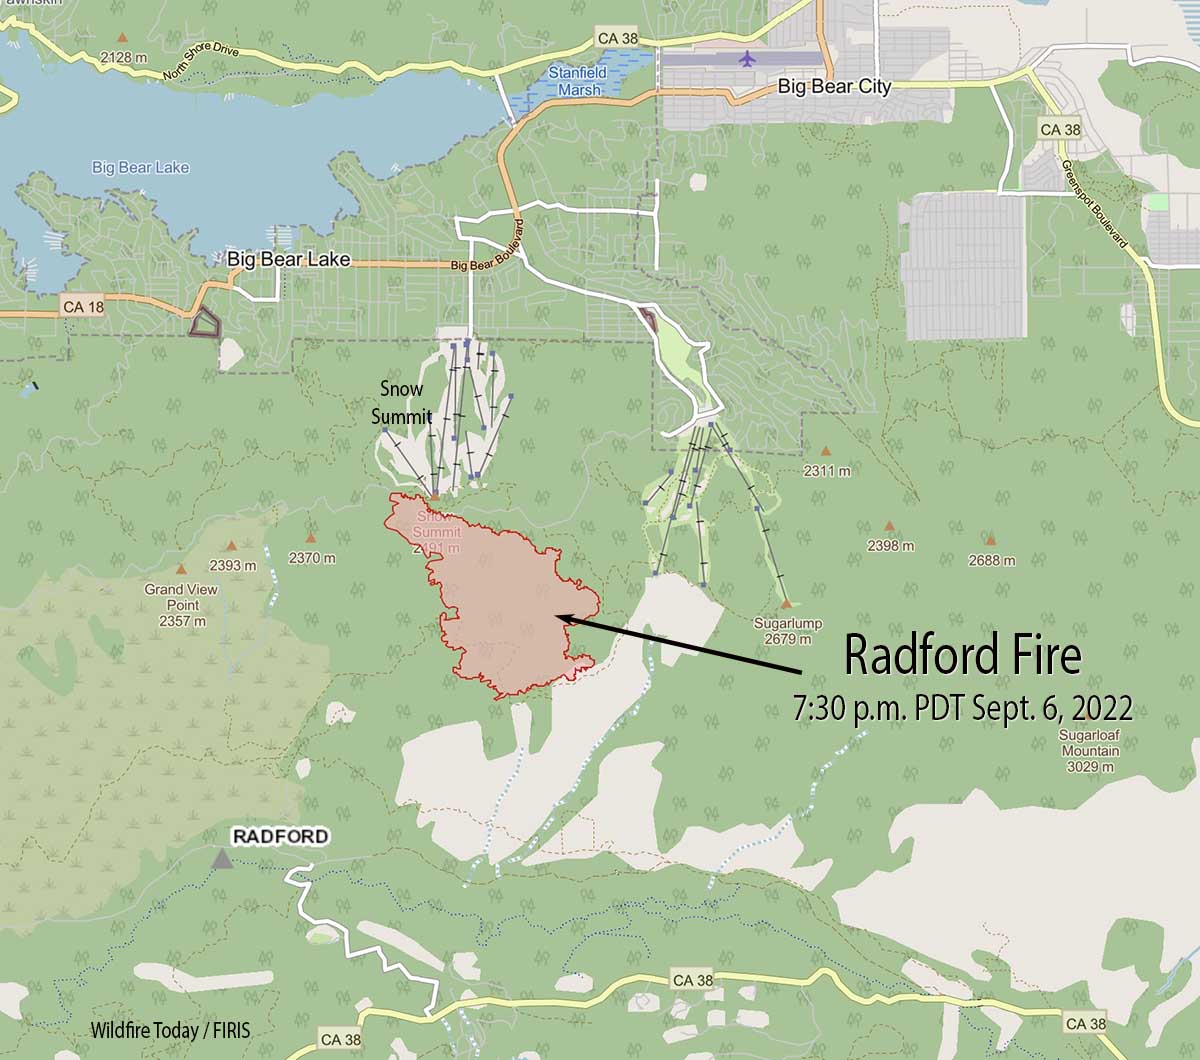 Radford Fire Map 7:30 p.m. Sept. 6, 2022